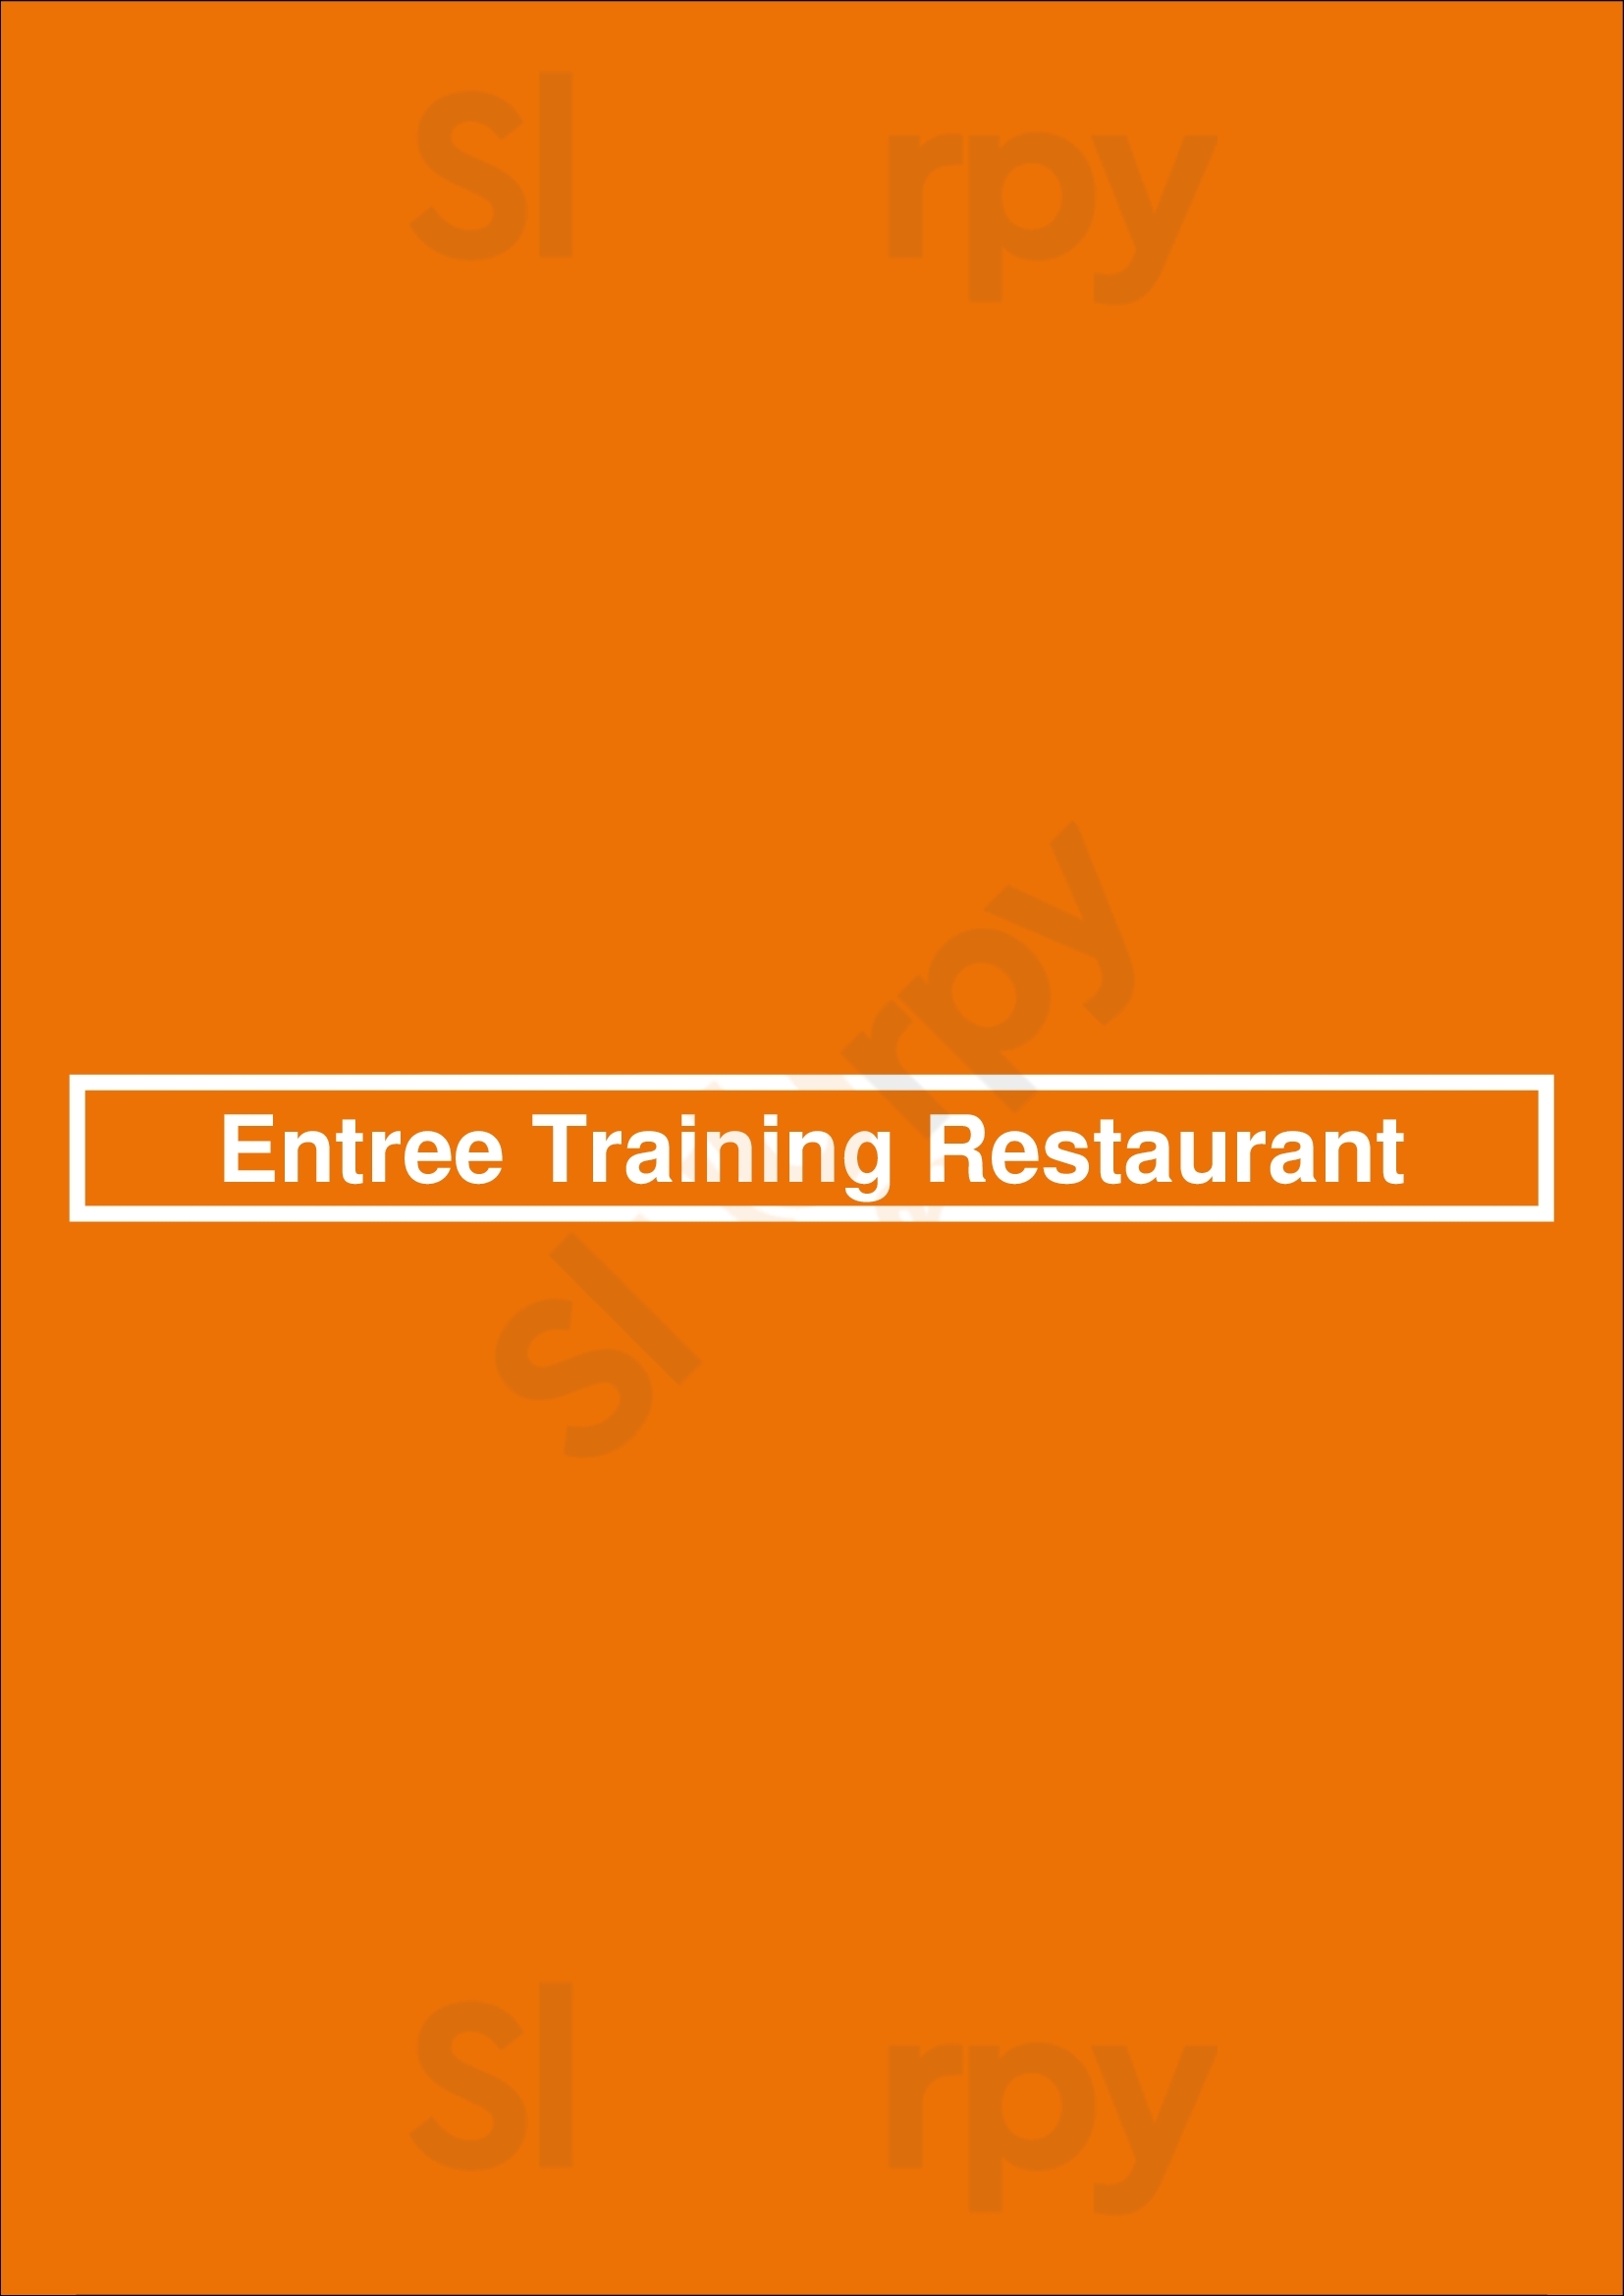 Entree Training Restaurant Kingswood Menu - 1